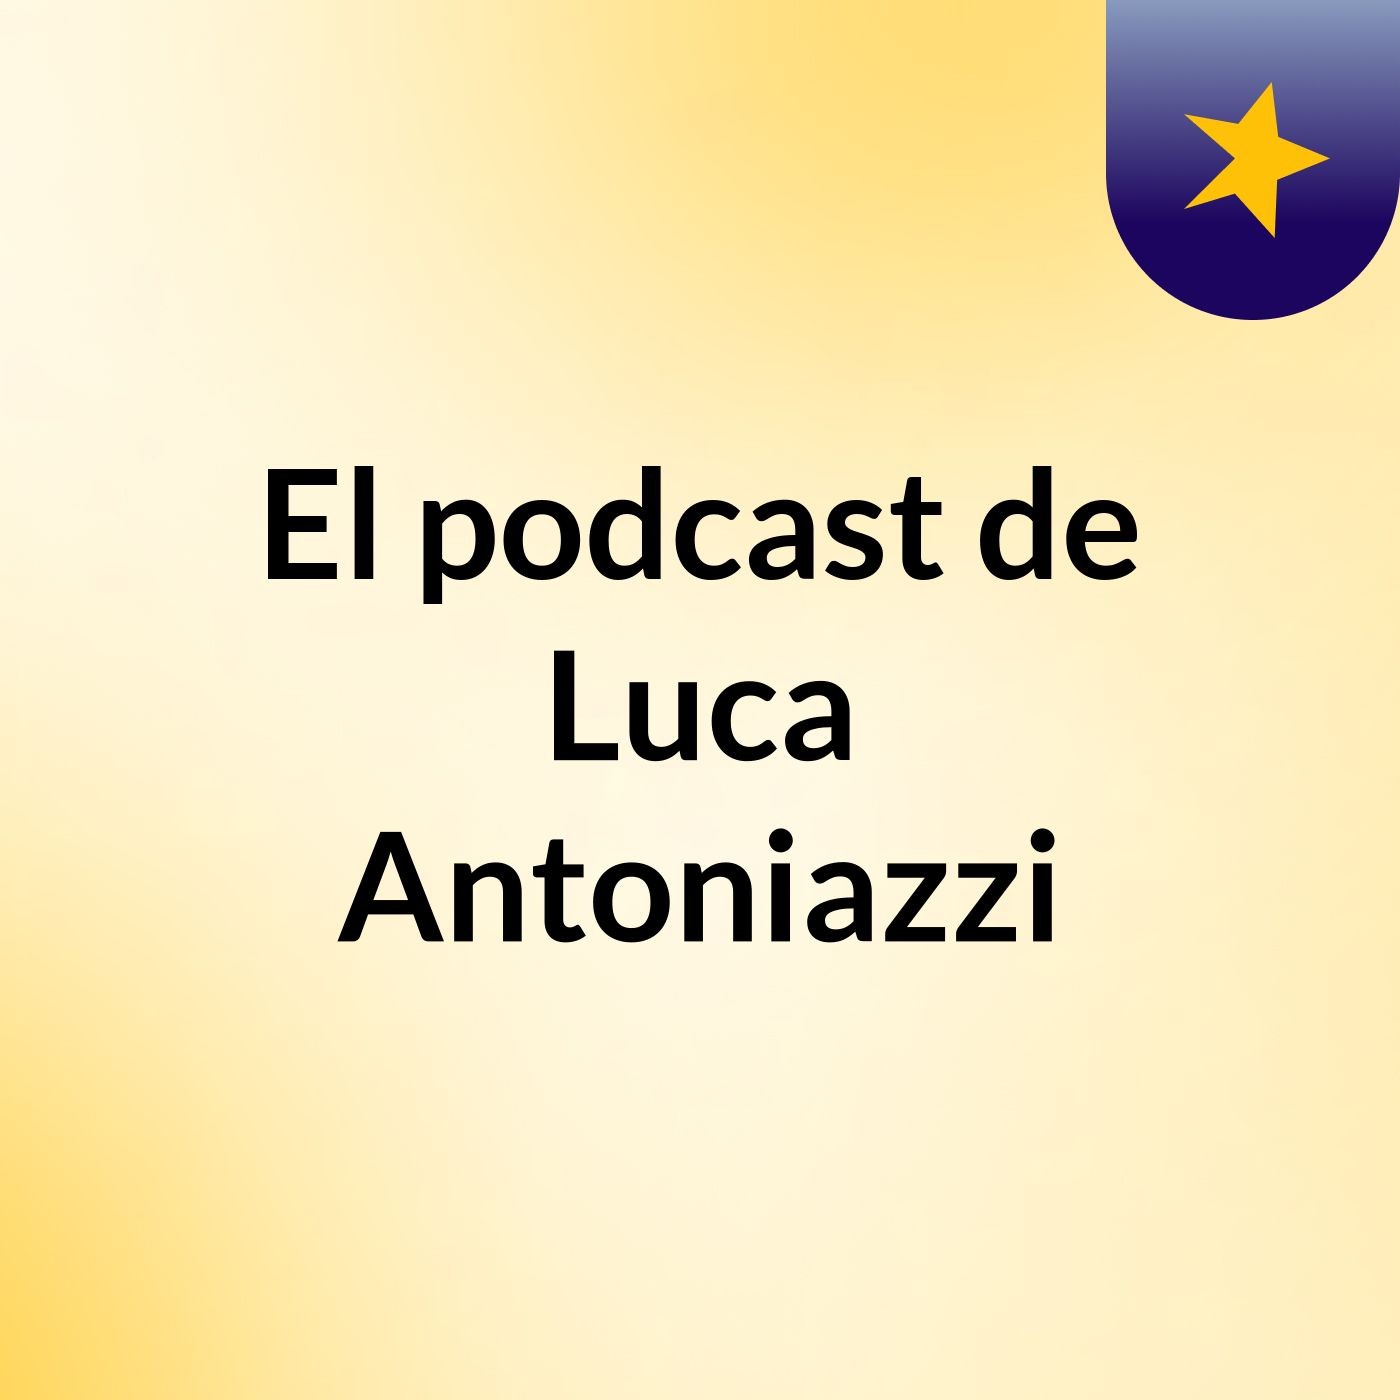 El podcast de Luca Antoniazzi